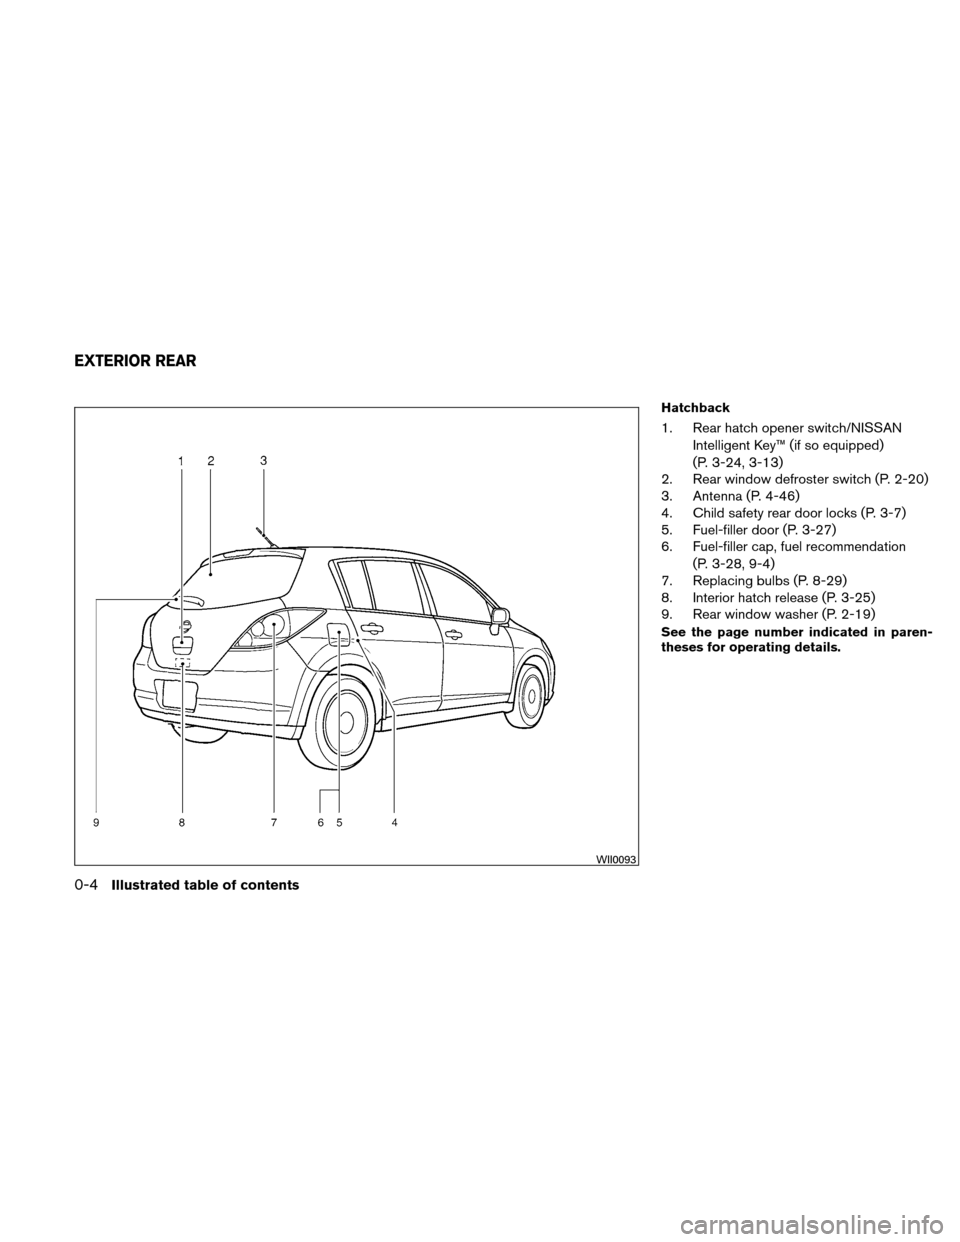 NISSAN VERSA HATCHBACK 2010 1.G User Guide Hatchback
1. Rear hatch opener switch/NISSANIntelligent Key™ (if so equipped)
(P. 3-24, 3-13)
2. Rear window defroster switch (P. 2-20)
3. Antenna (P. 4-46)
4. Child safety rear door locks (P. 3-7)
